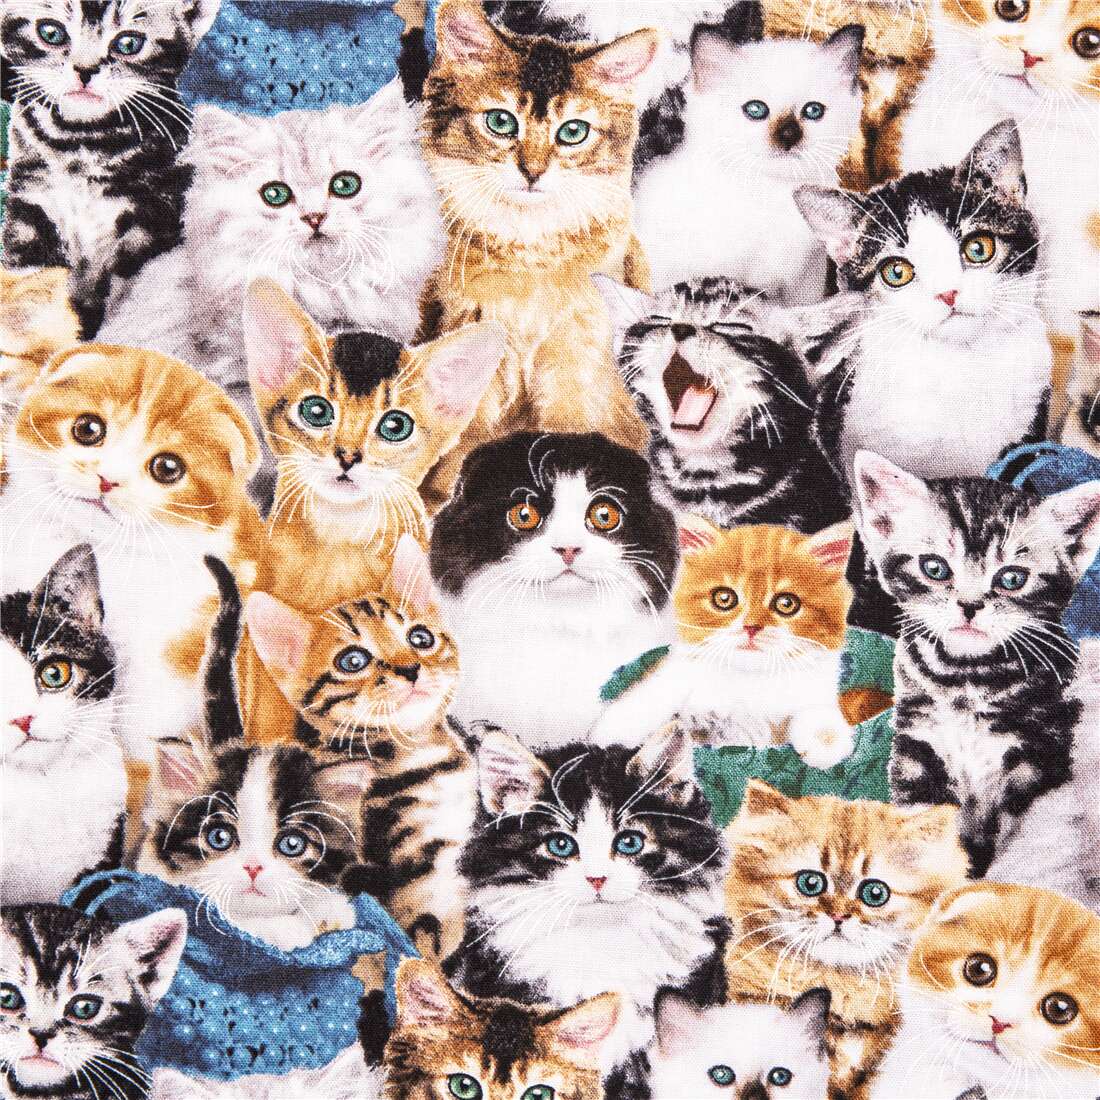 animal fabric with kittens pets themed Elizabeth's Studio - modeS4u